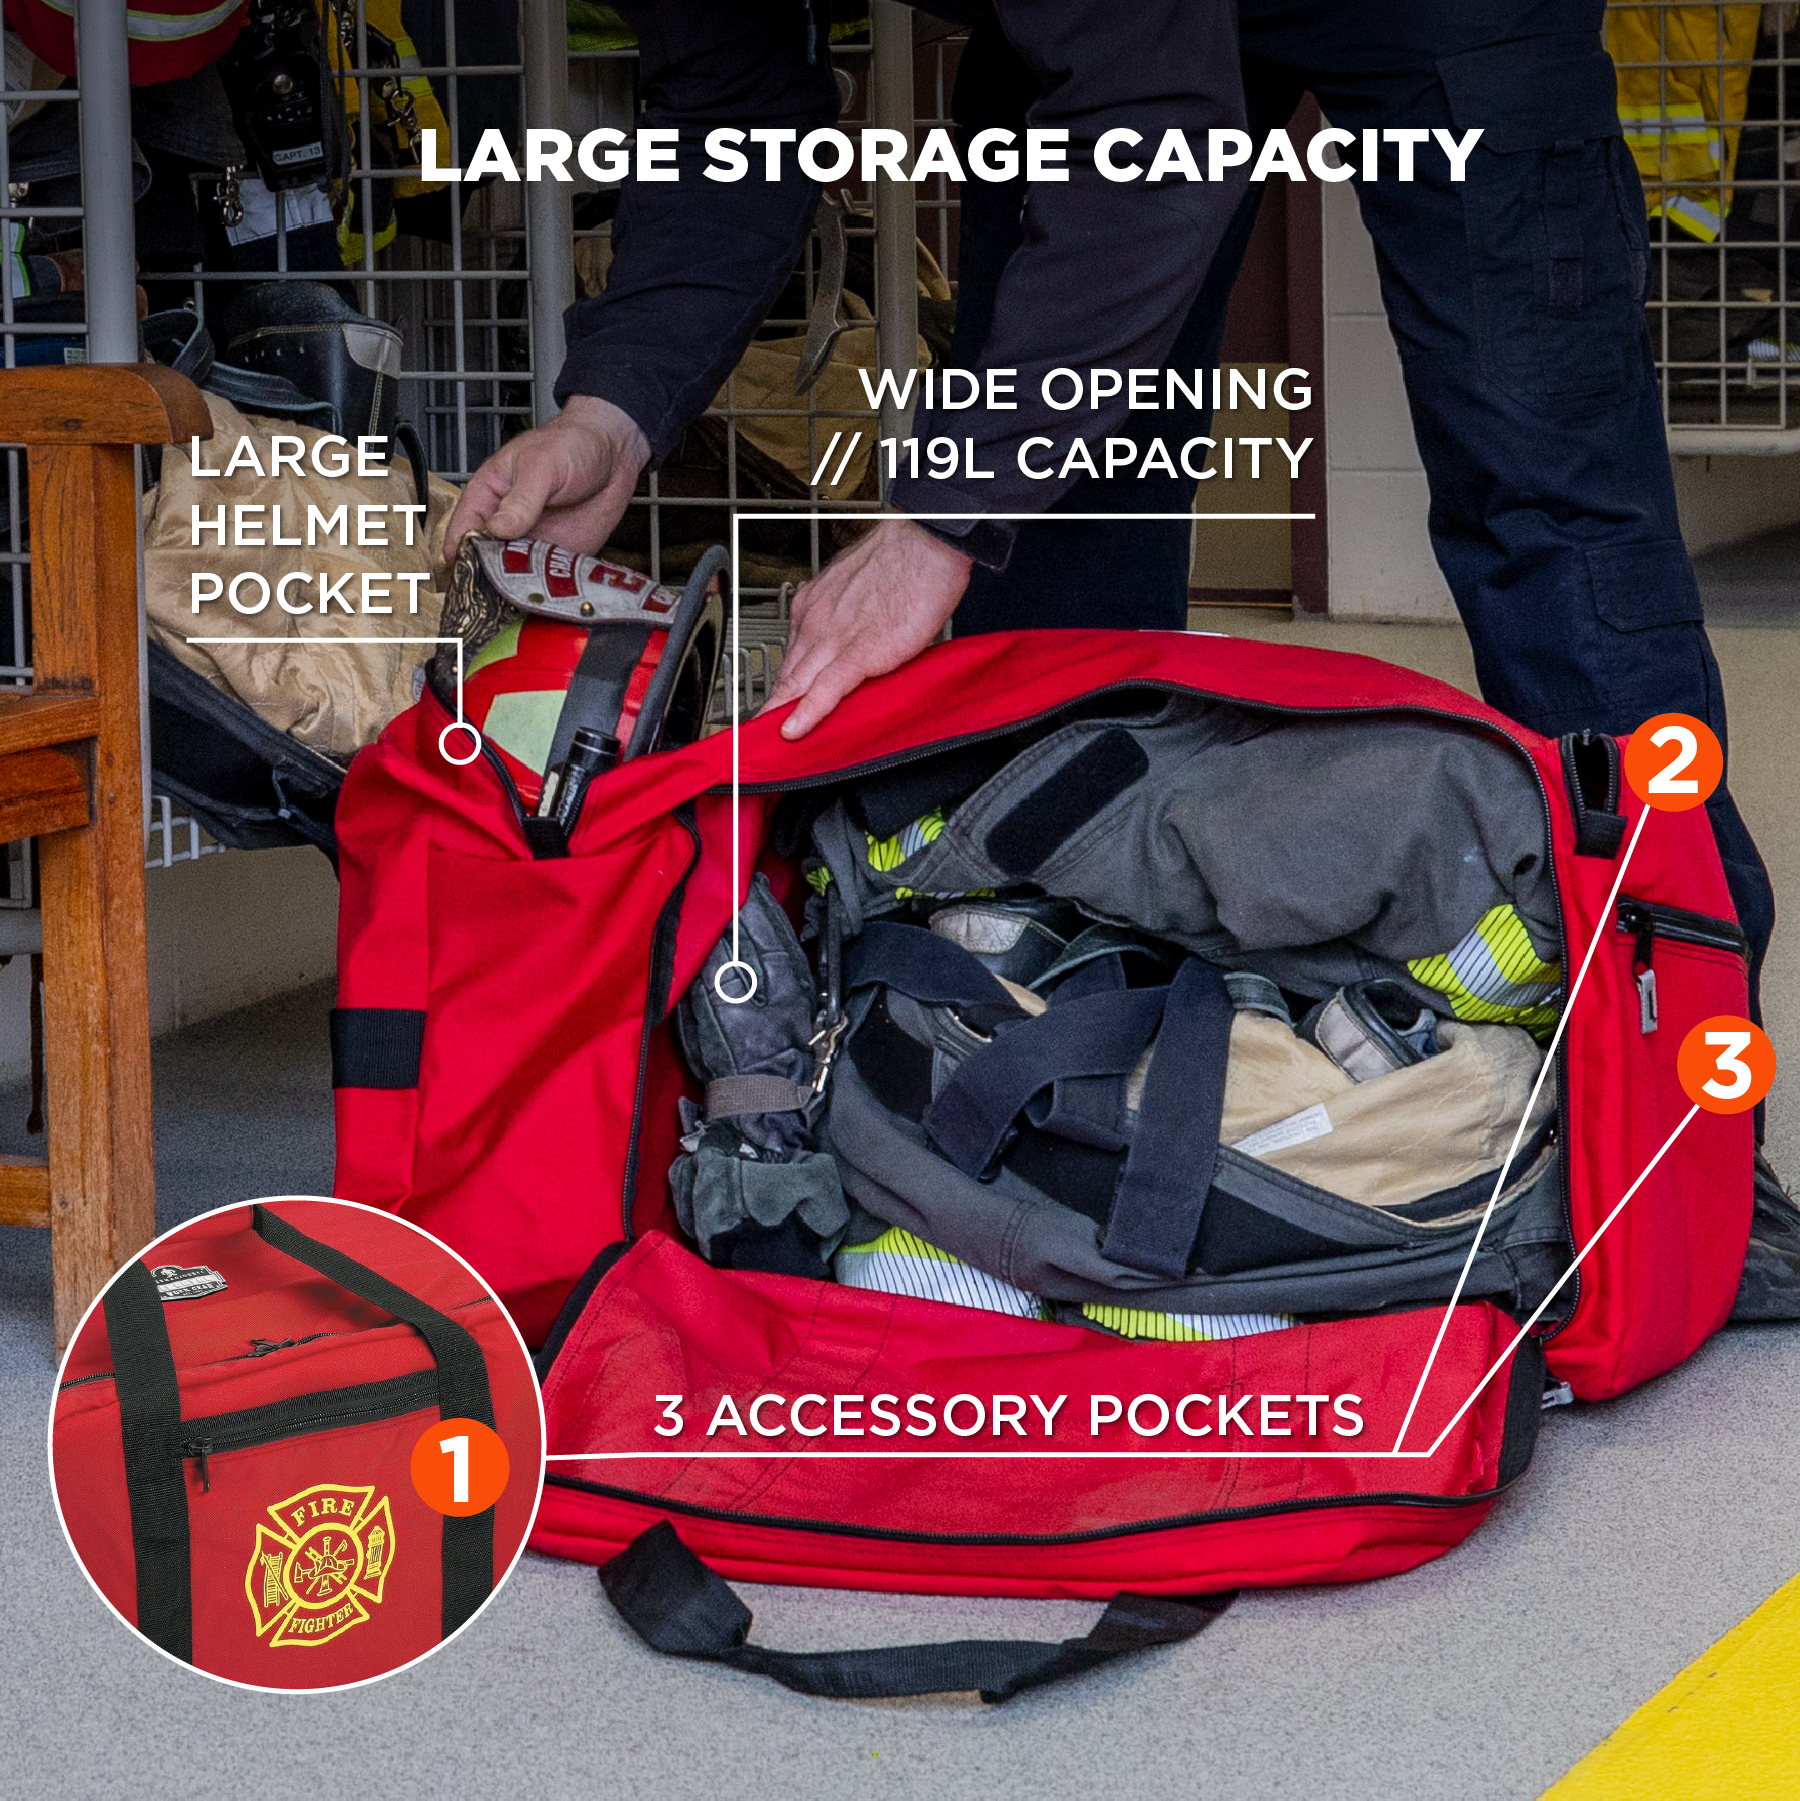 https://www.ergodyne.com/sites/default/files/product-images/13005-5005-firefighter-turnout-bag-red-large-storage-capacity.jpg